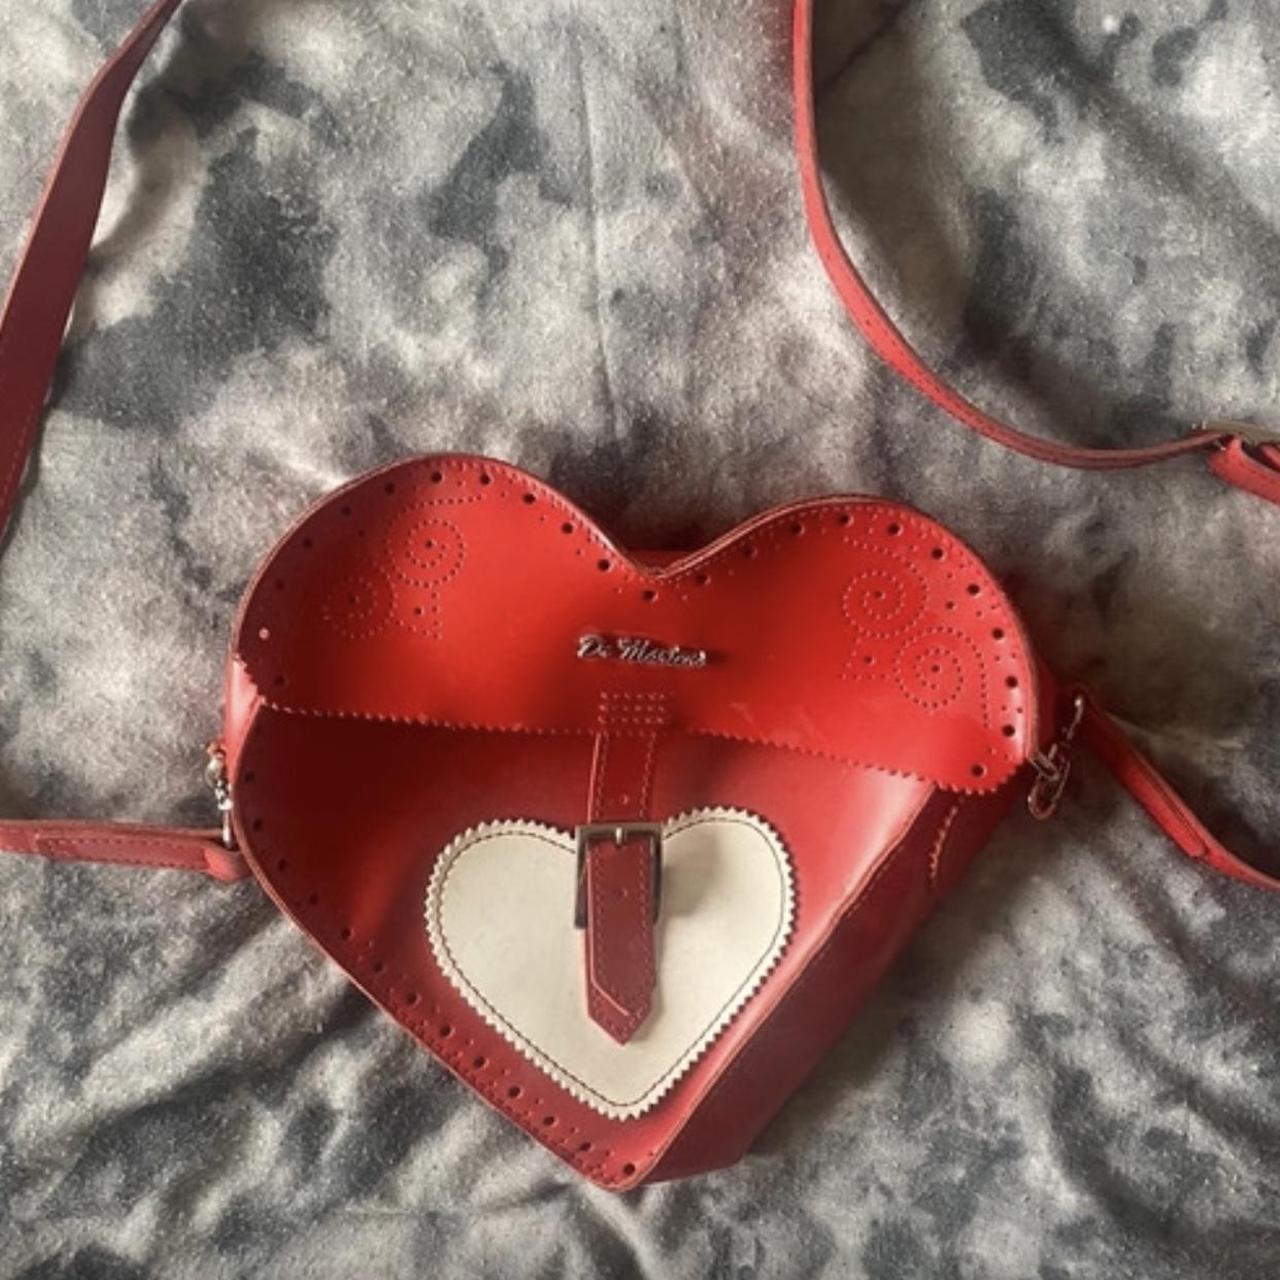 Dr Martens super rare bag. Heart shaped red and - Depop